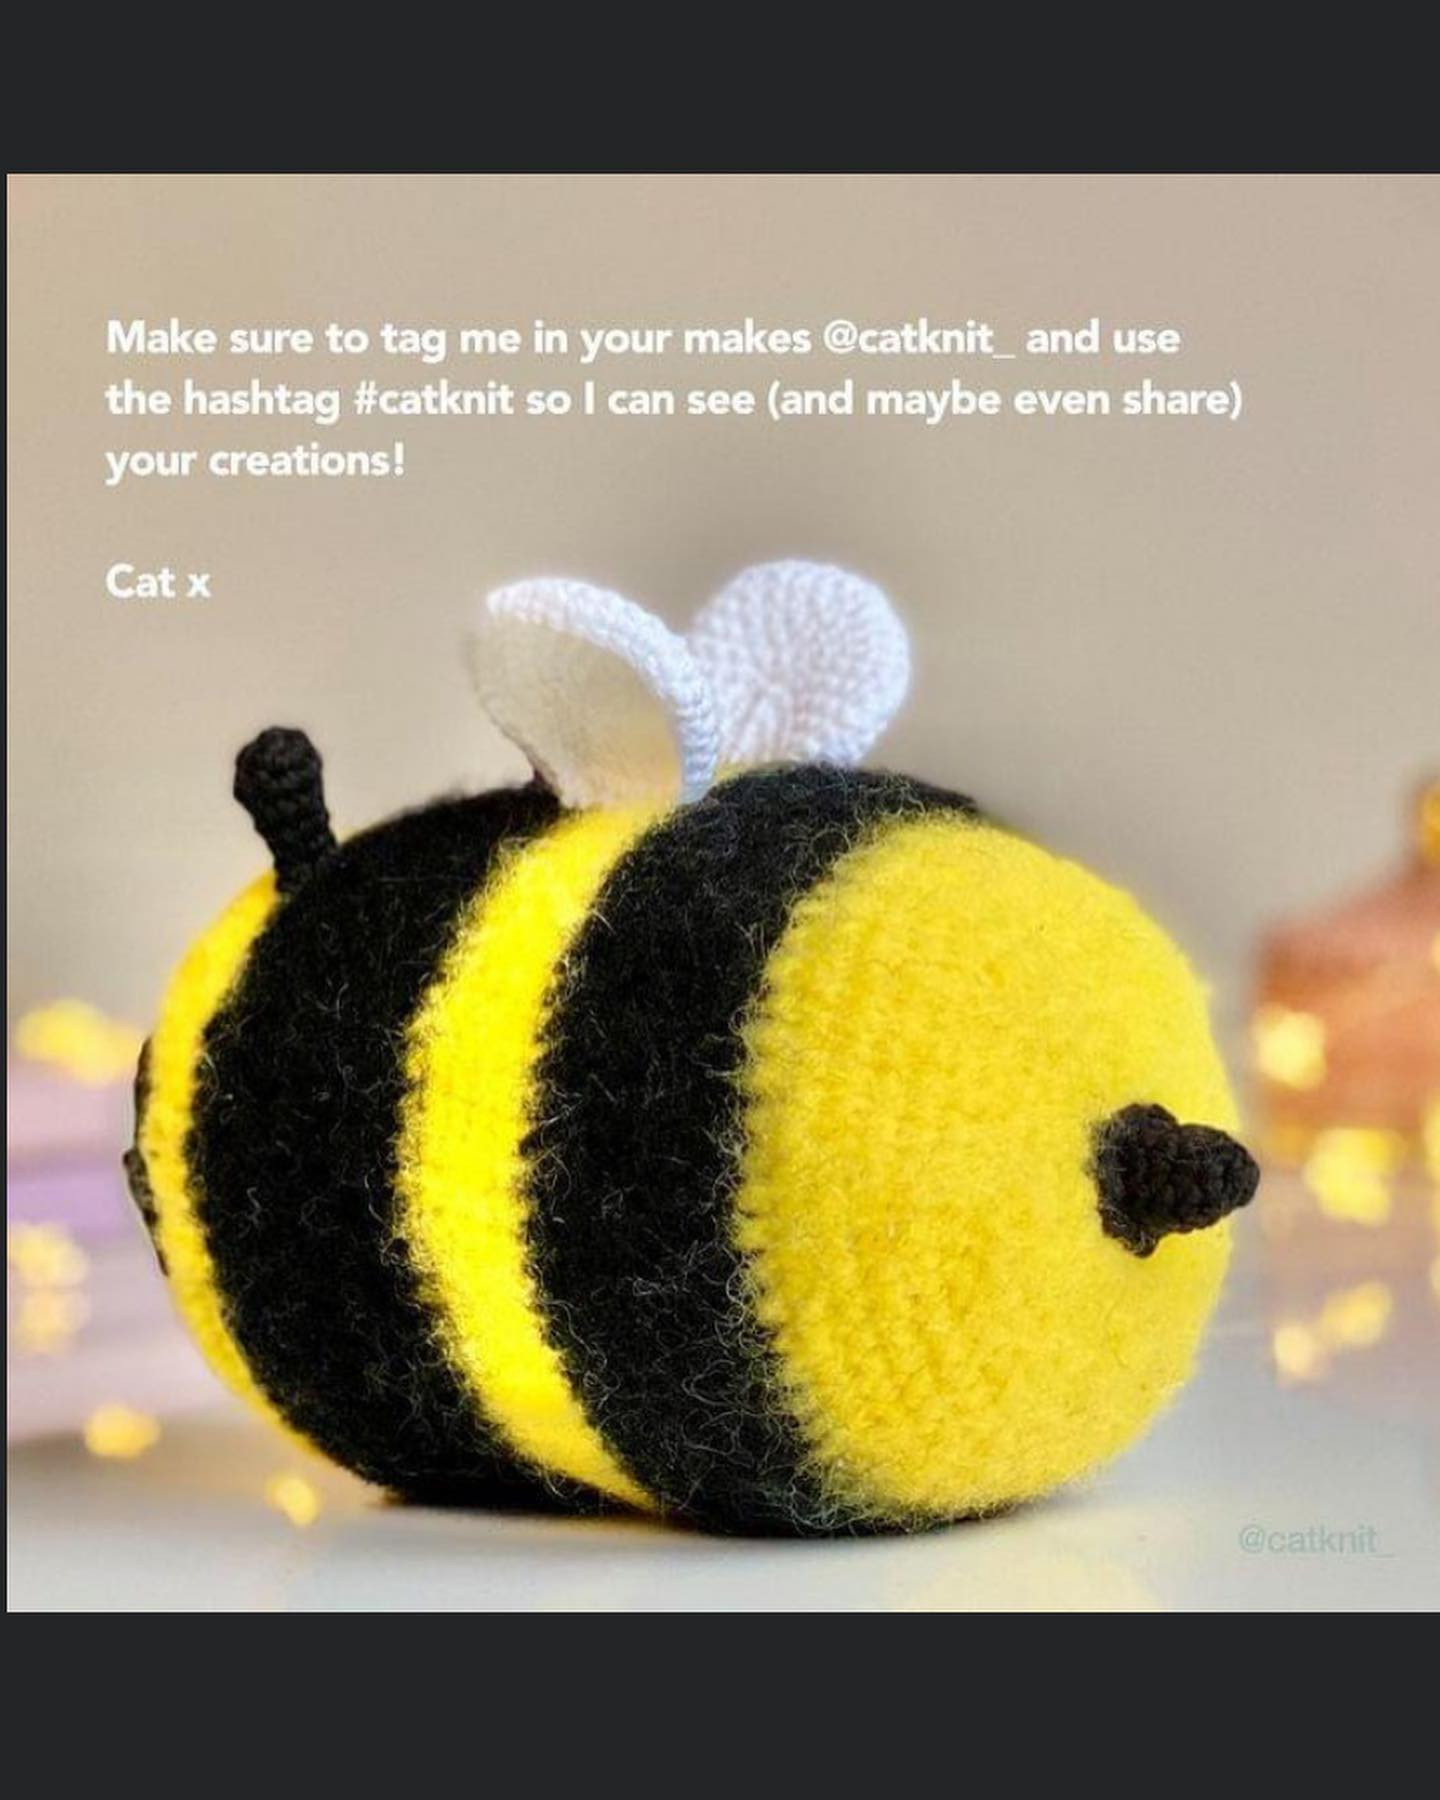 Yellow bee, black stripes, white wings, free crochet pattern.